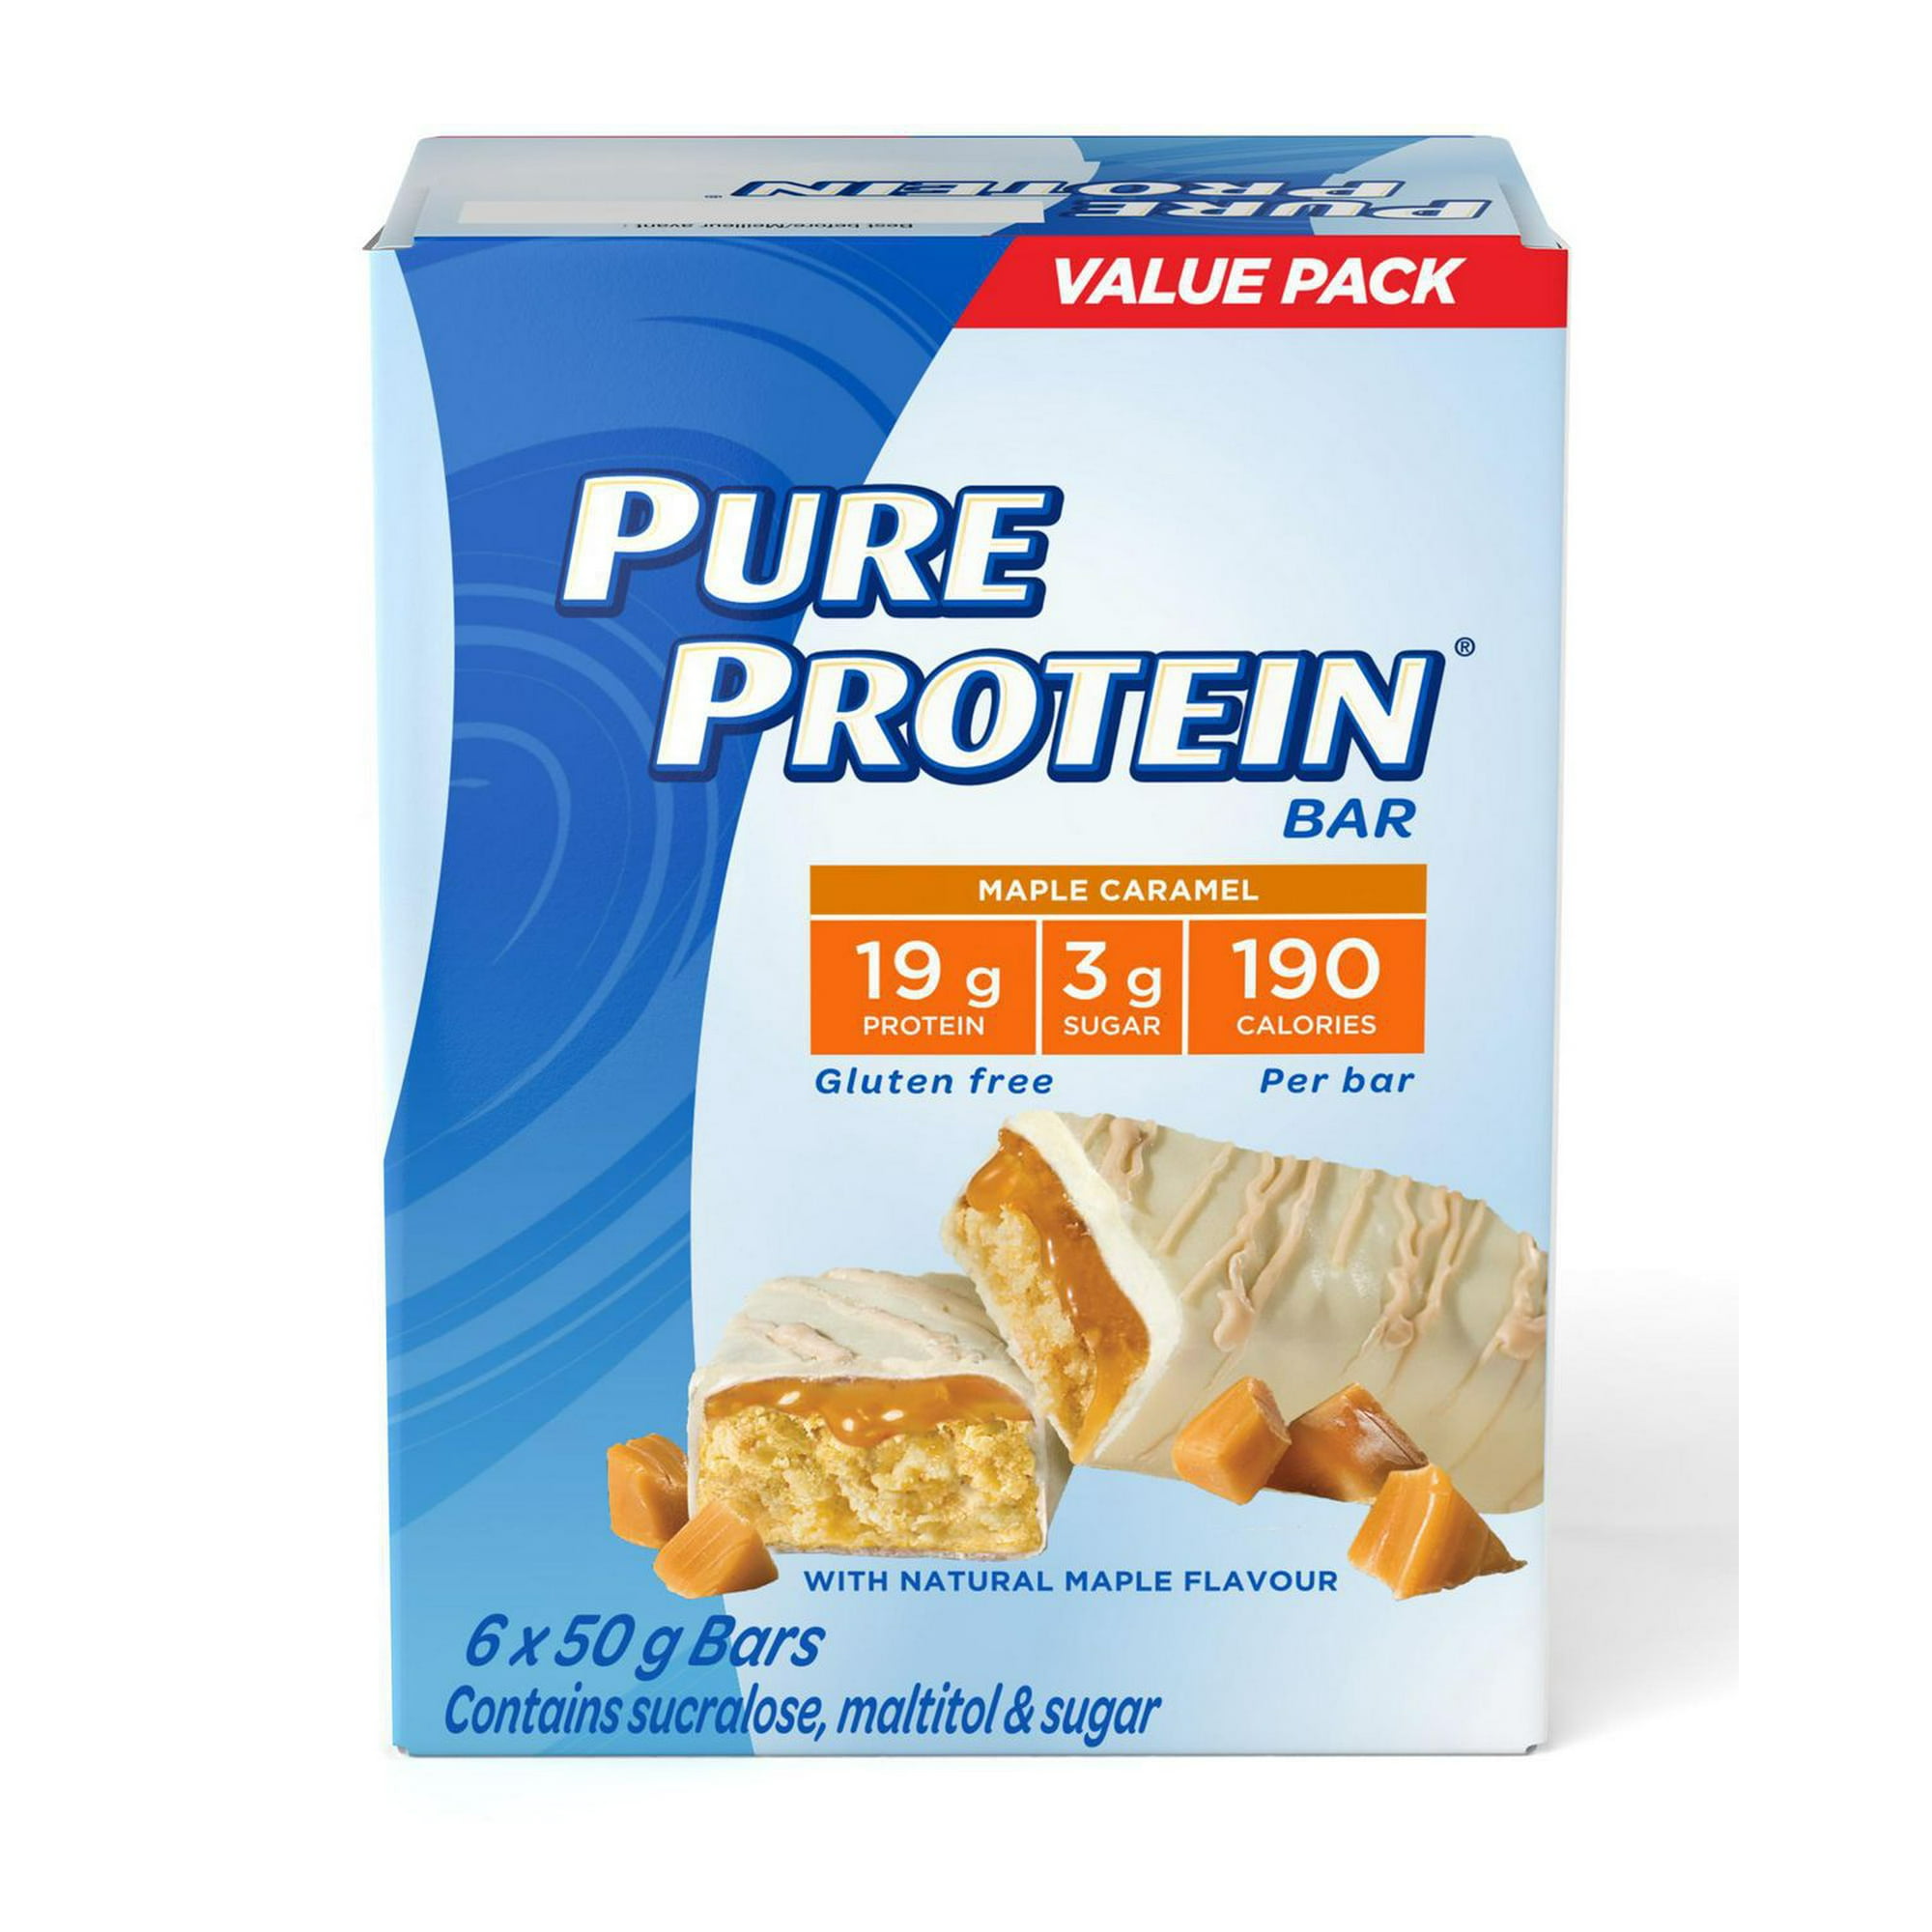 Breakfast protein bar - Yoga Bar - 50g